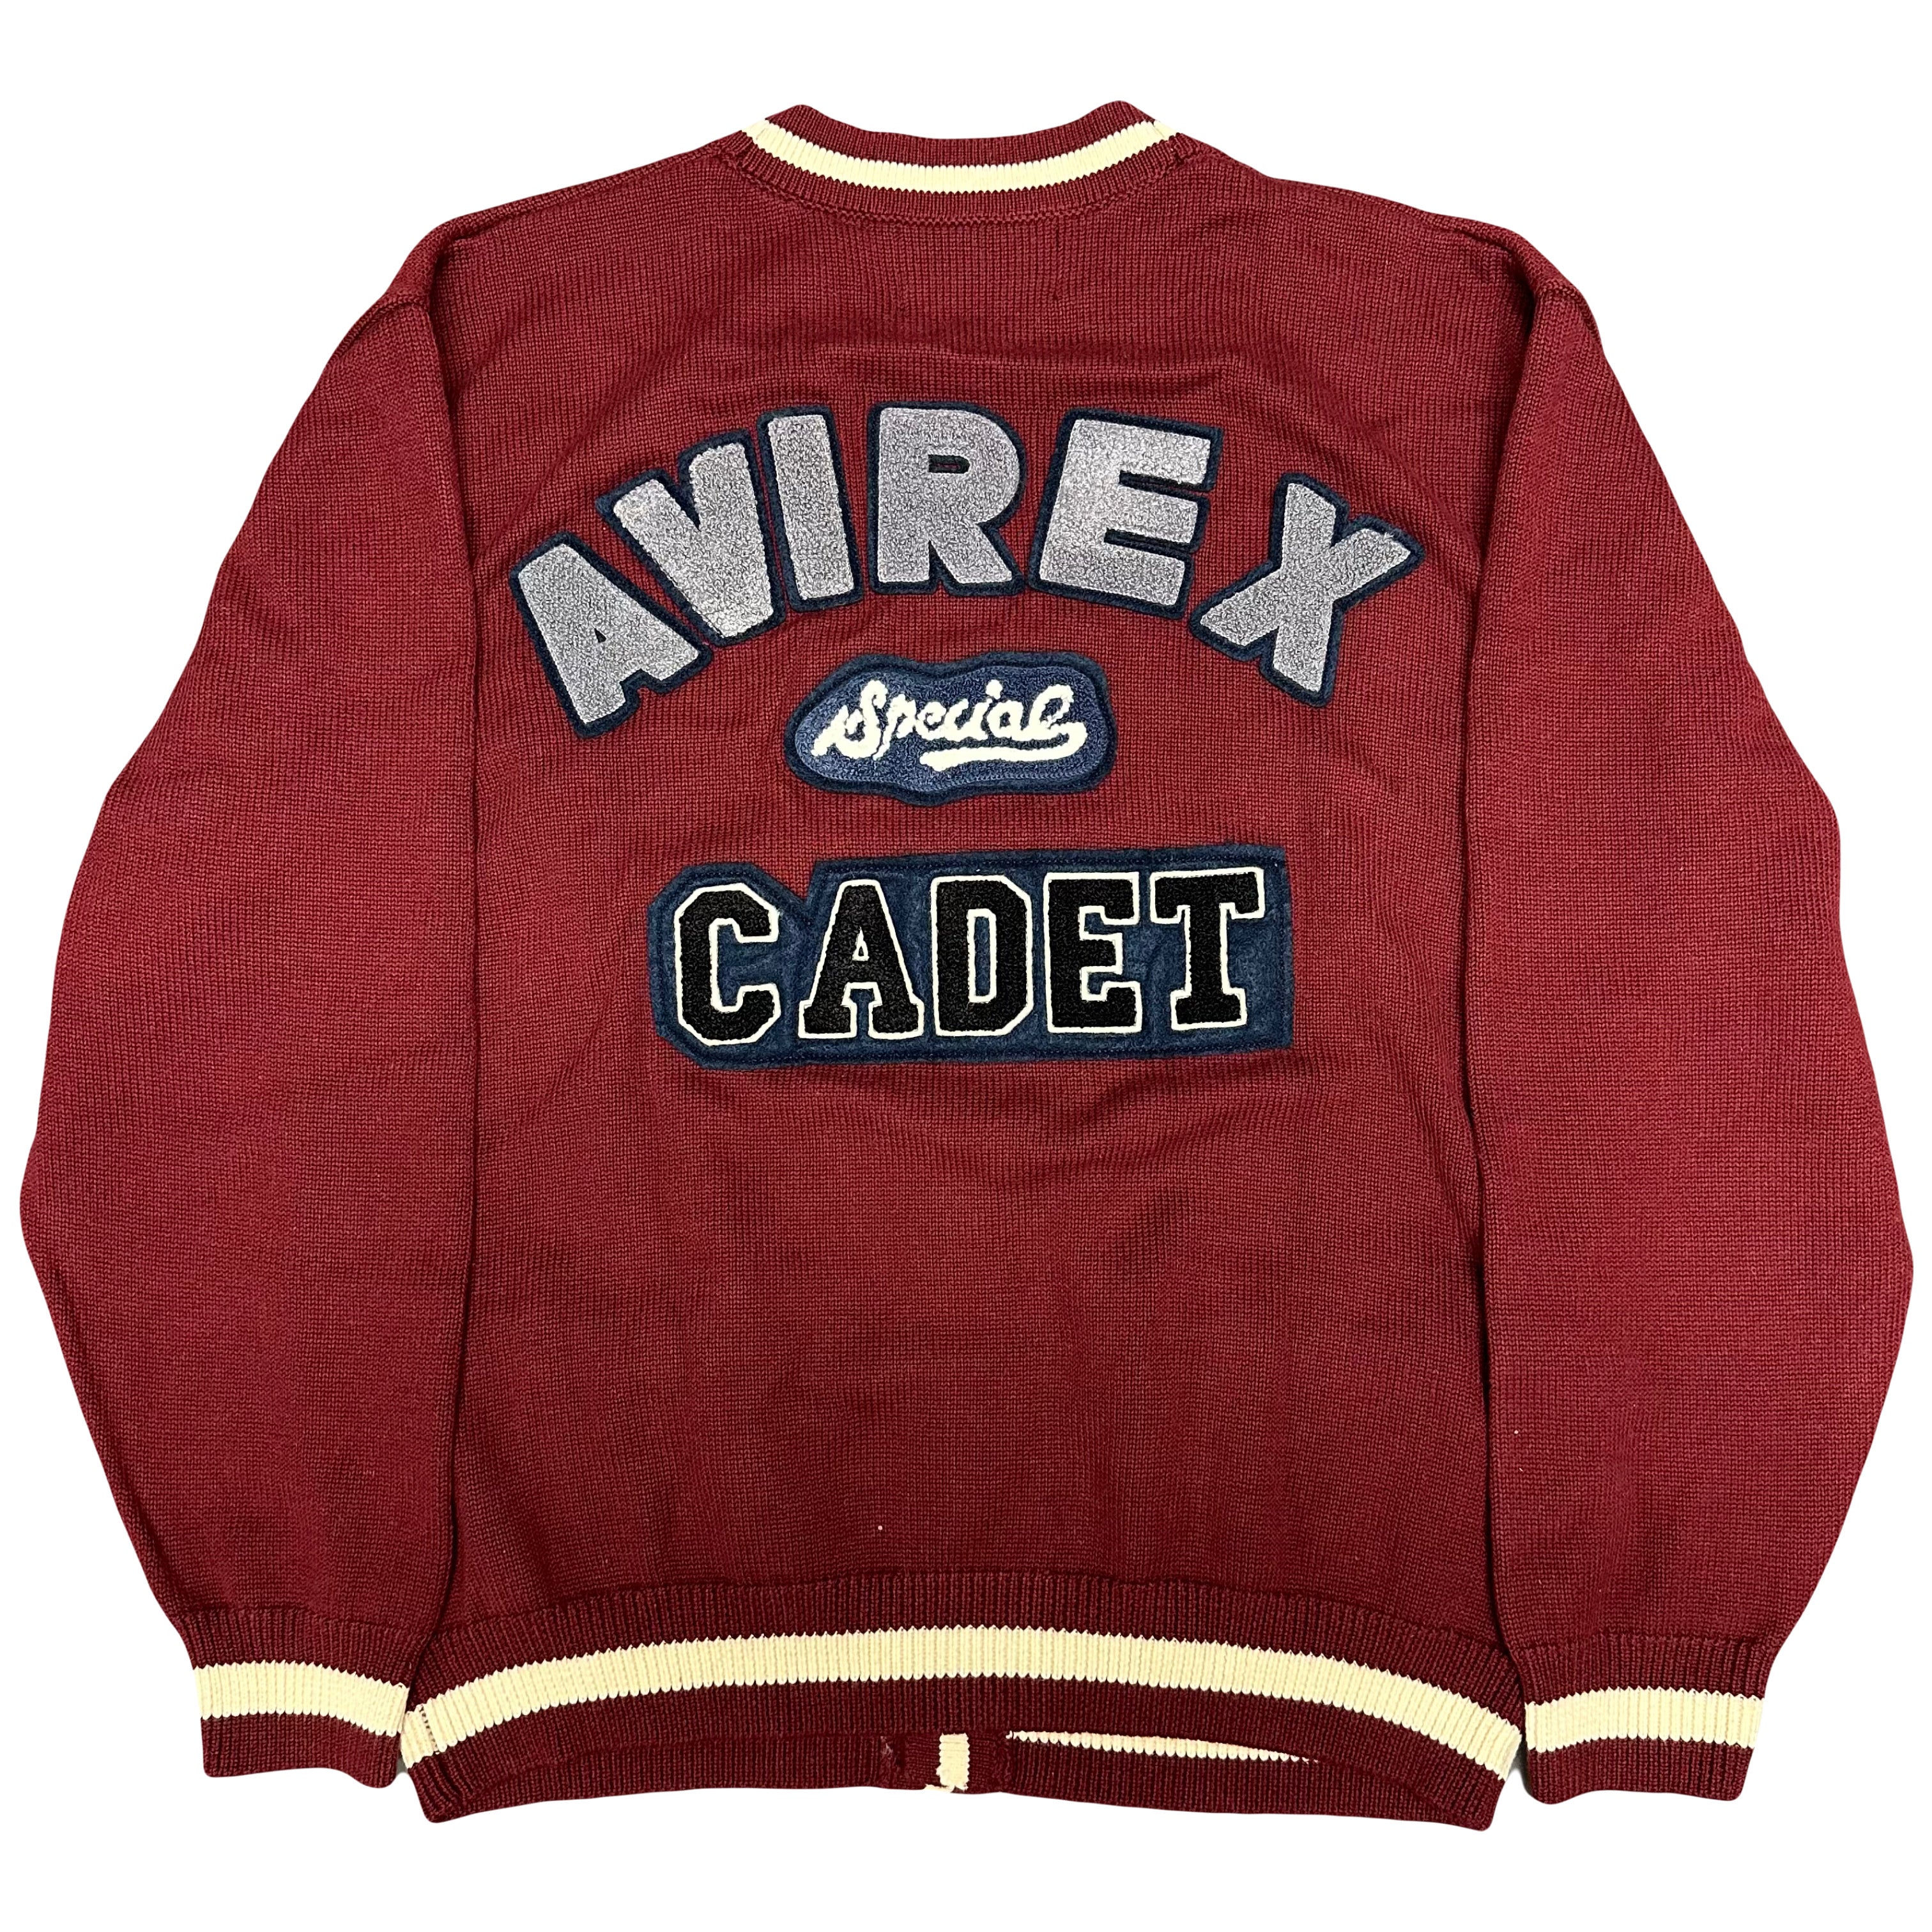 Avirex Cadet Knitted Cardigan In Burgundy ( M )